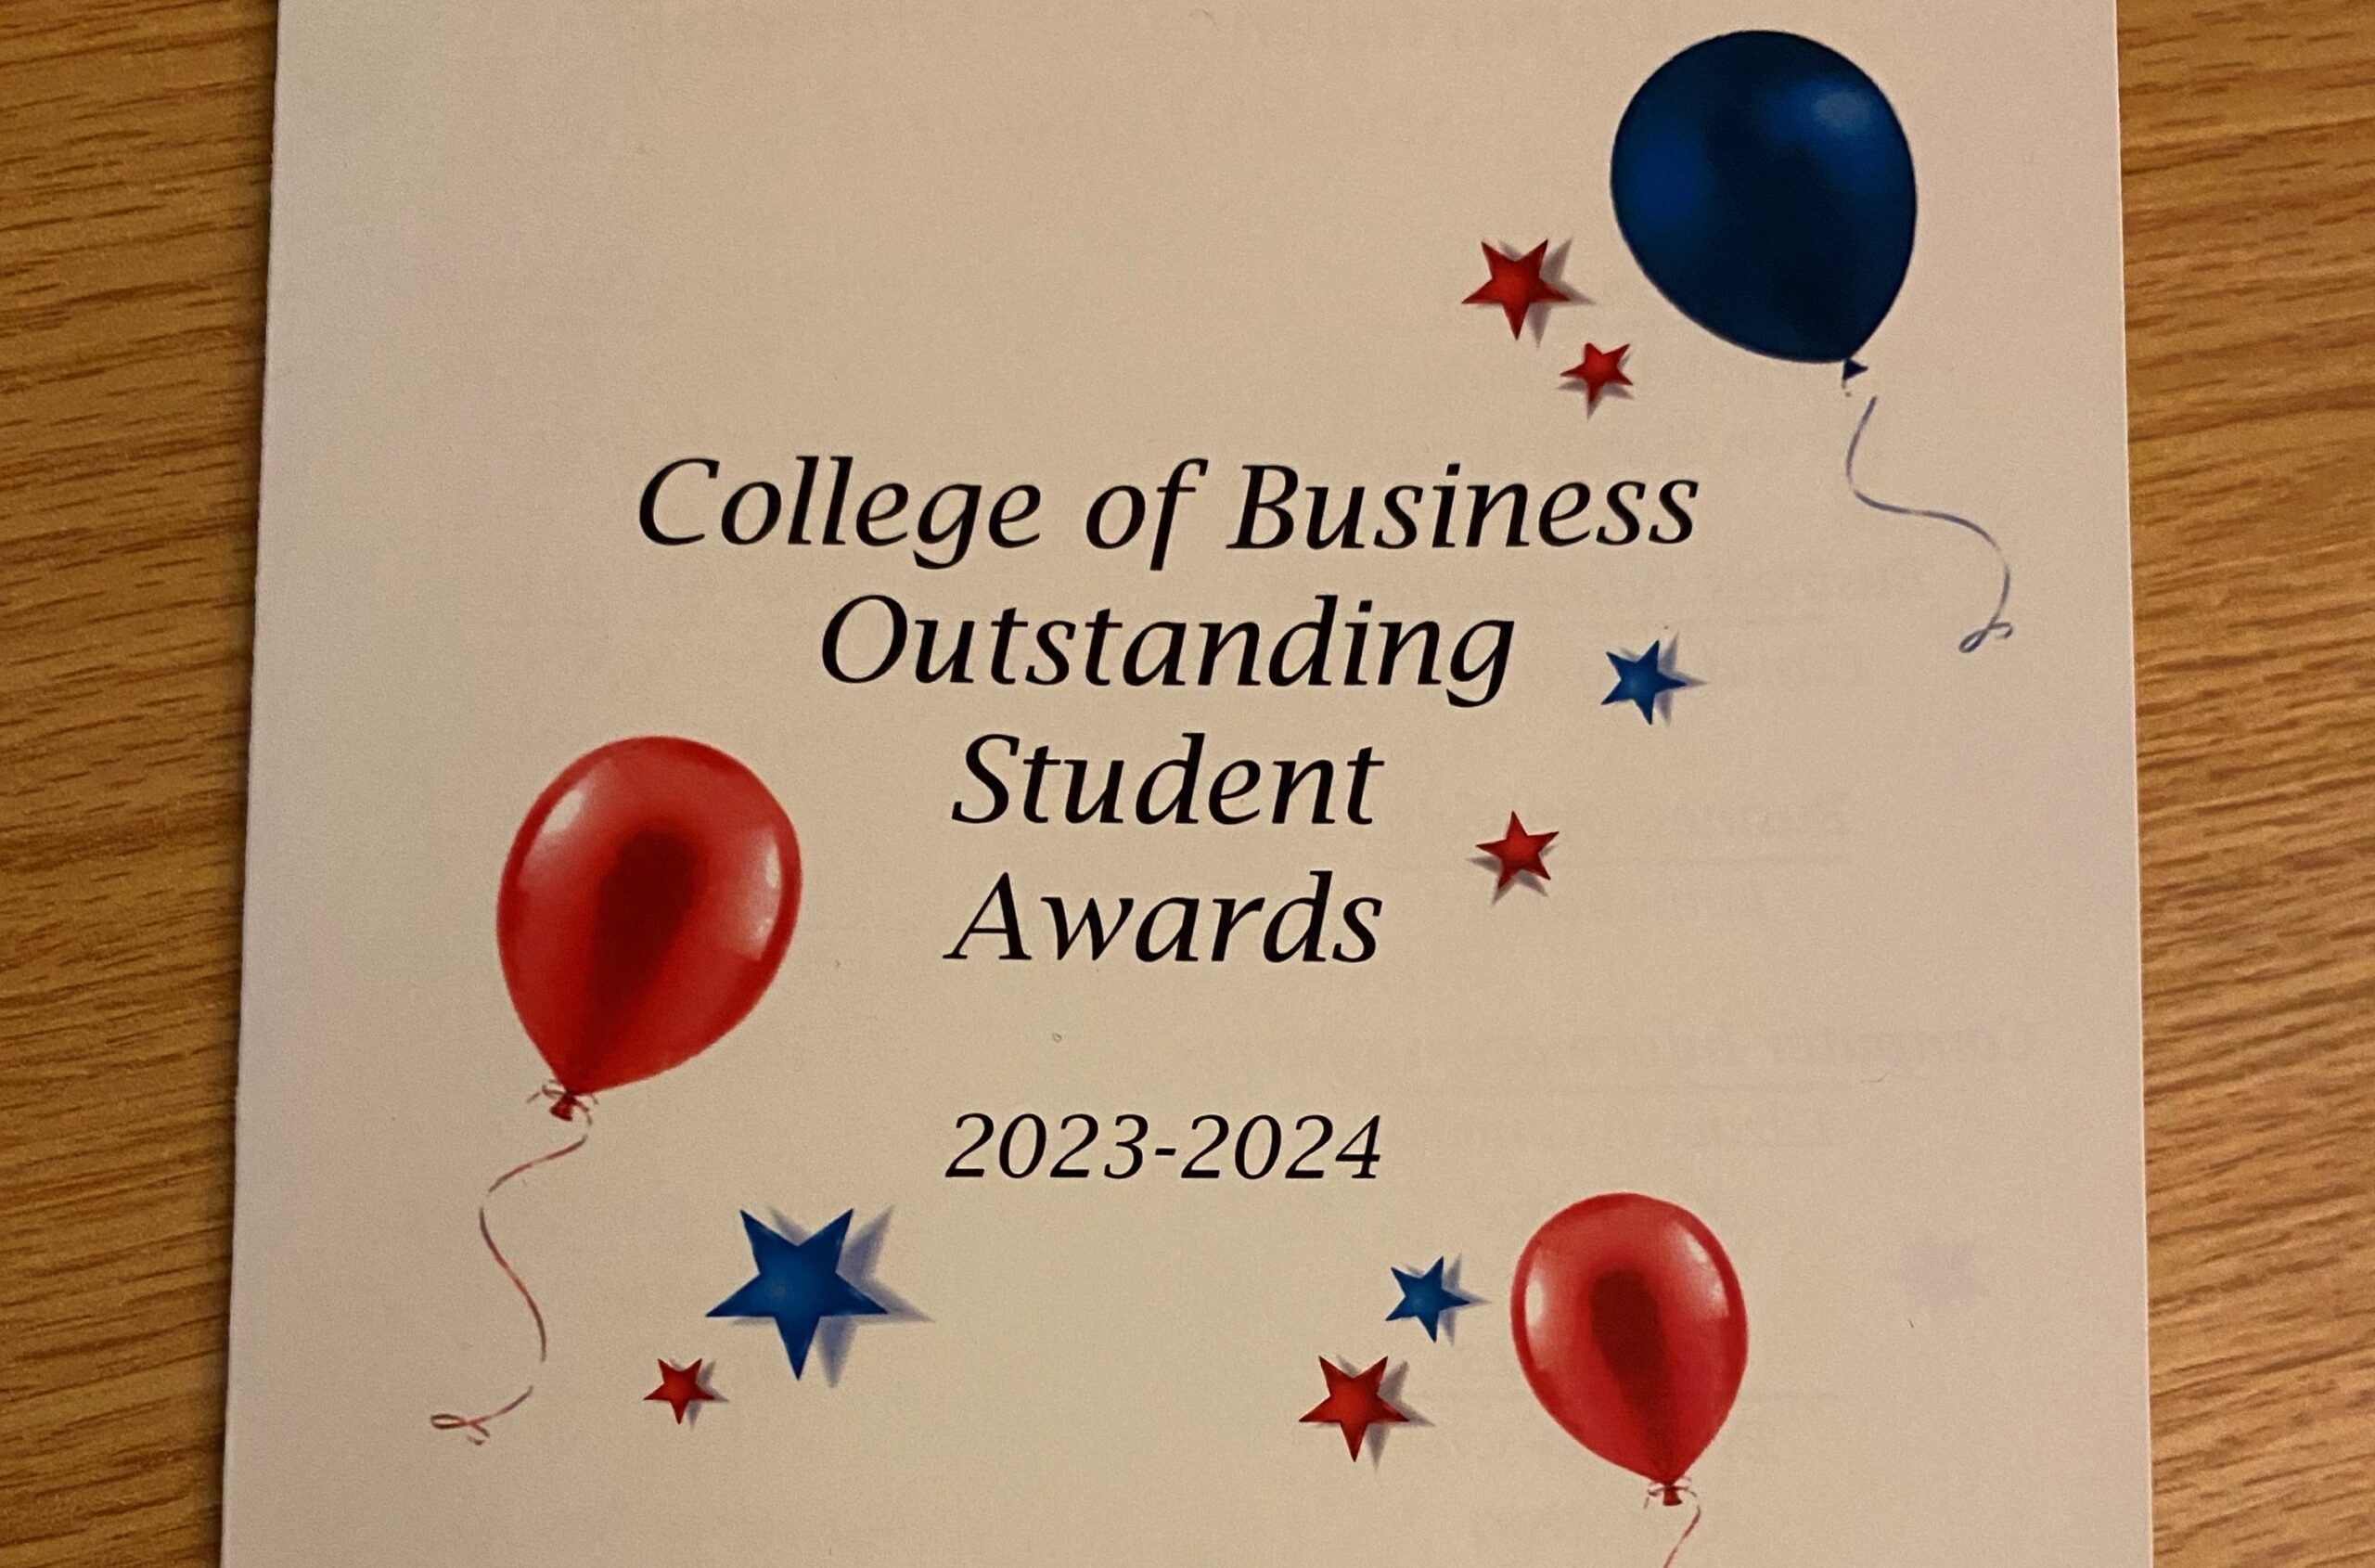 CBUS Outstanding Student Awards 2023-2024 program